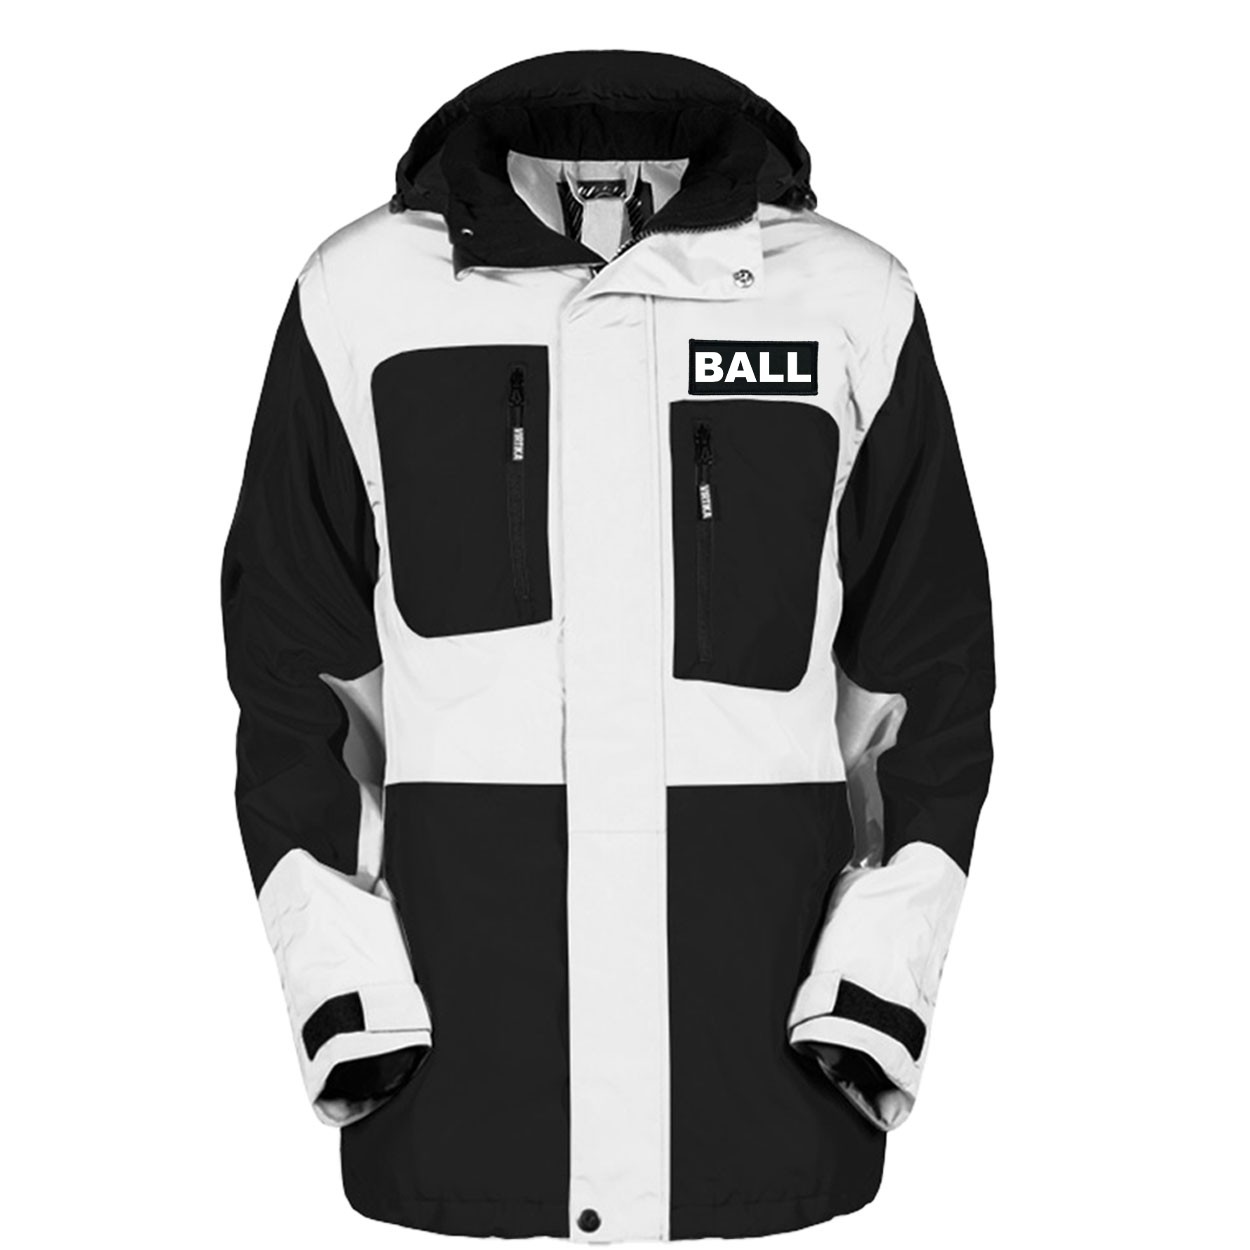 Ball Brand Logo Classic Woven Patch Pro Snowboard Jacket (Black/White)